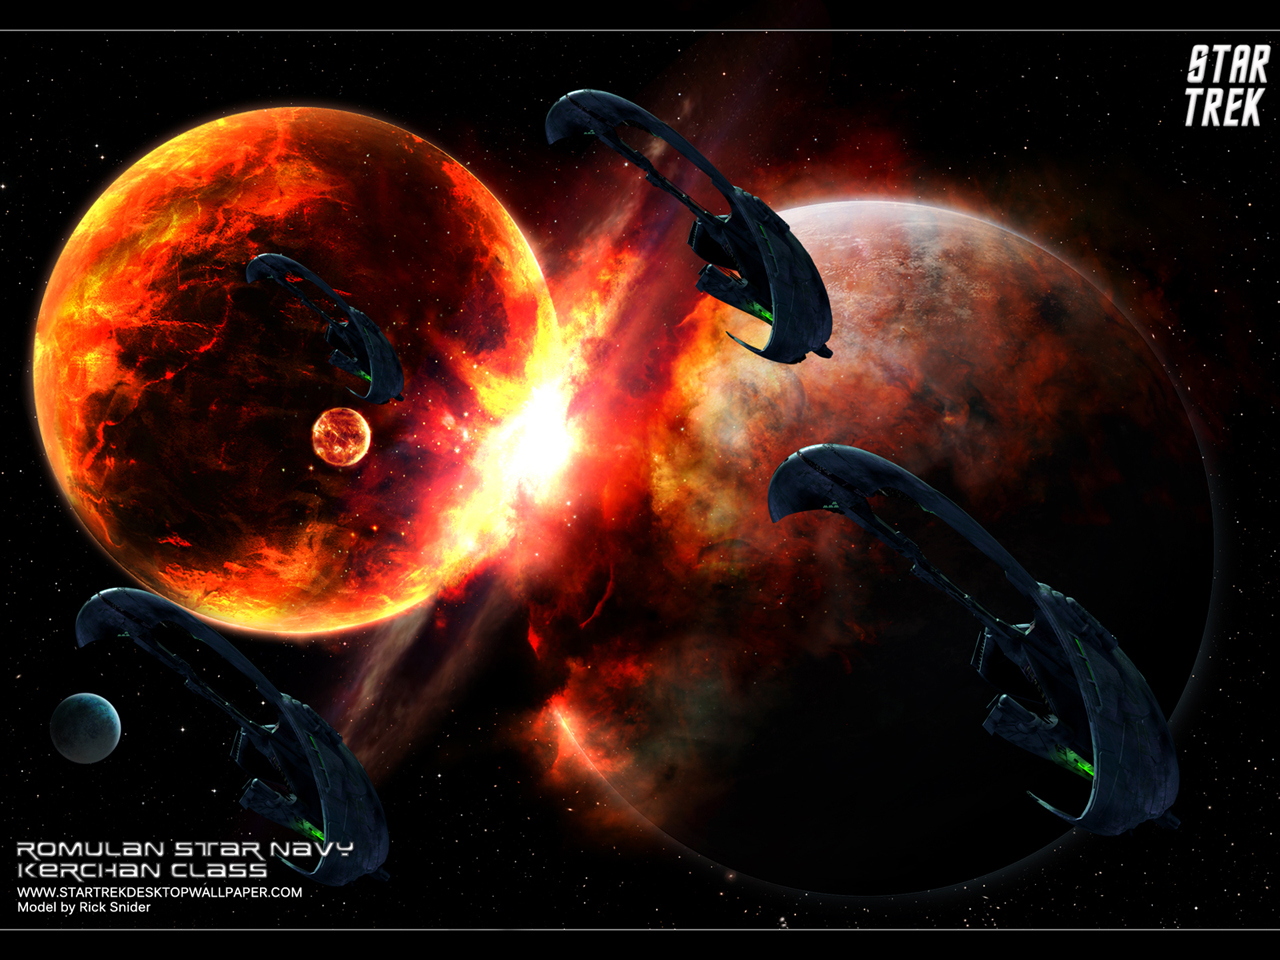 - Star Trek Romulan Star Navy Kerchan Class - free Star Trek computer desktop wallpaper, pictures, images.